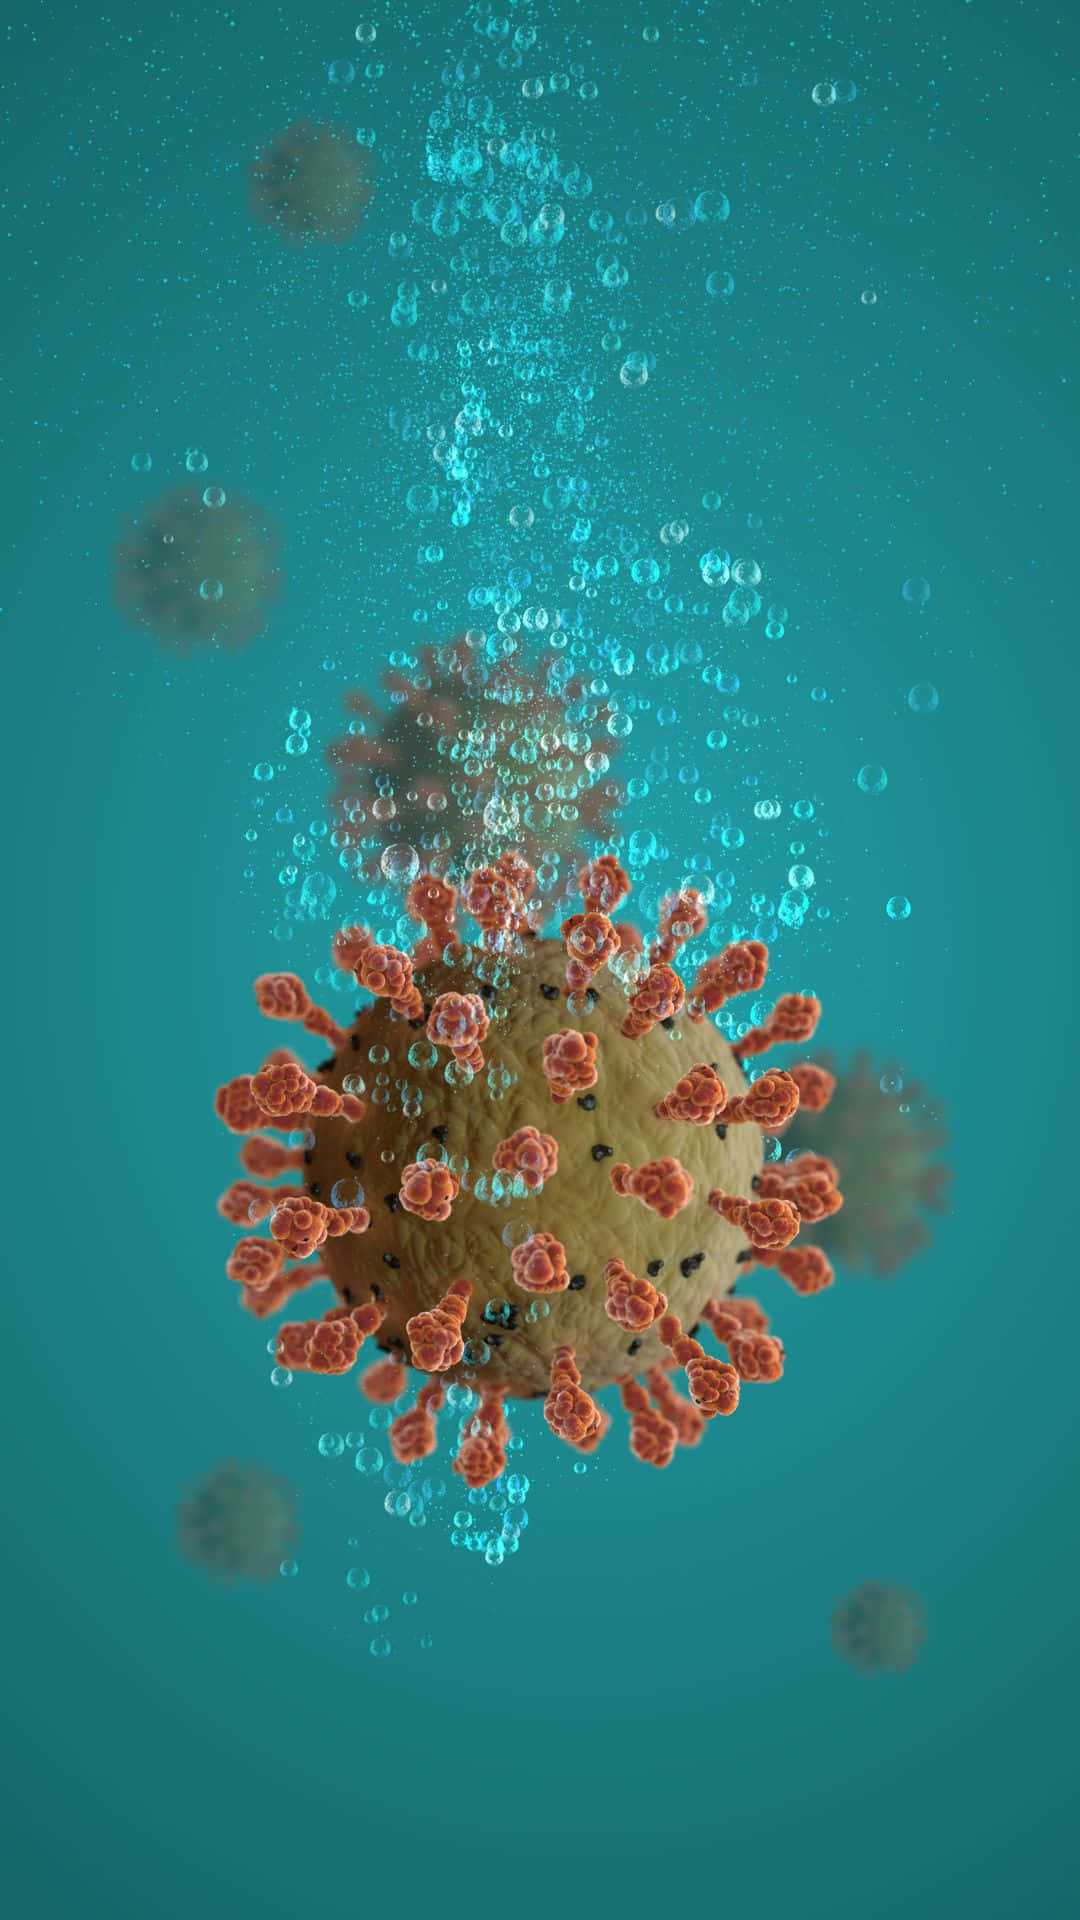 Virus Particle Underwater Illustration Wallpaper